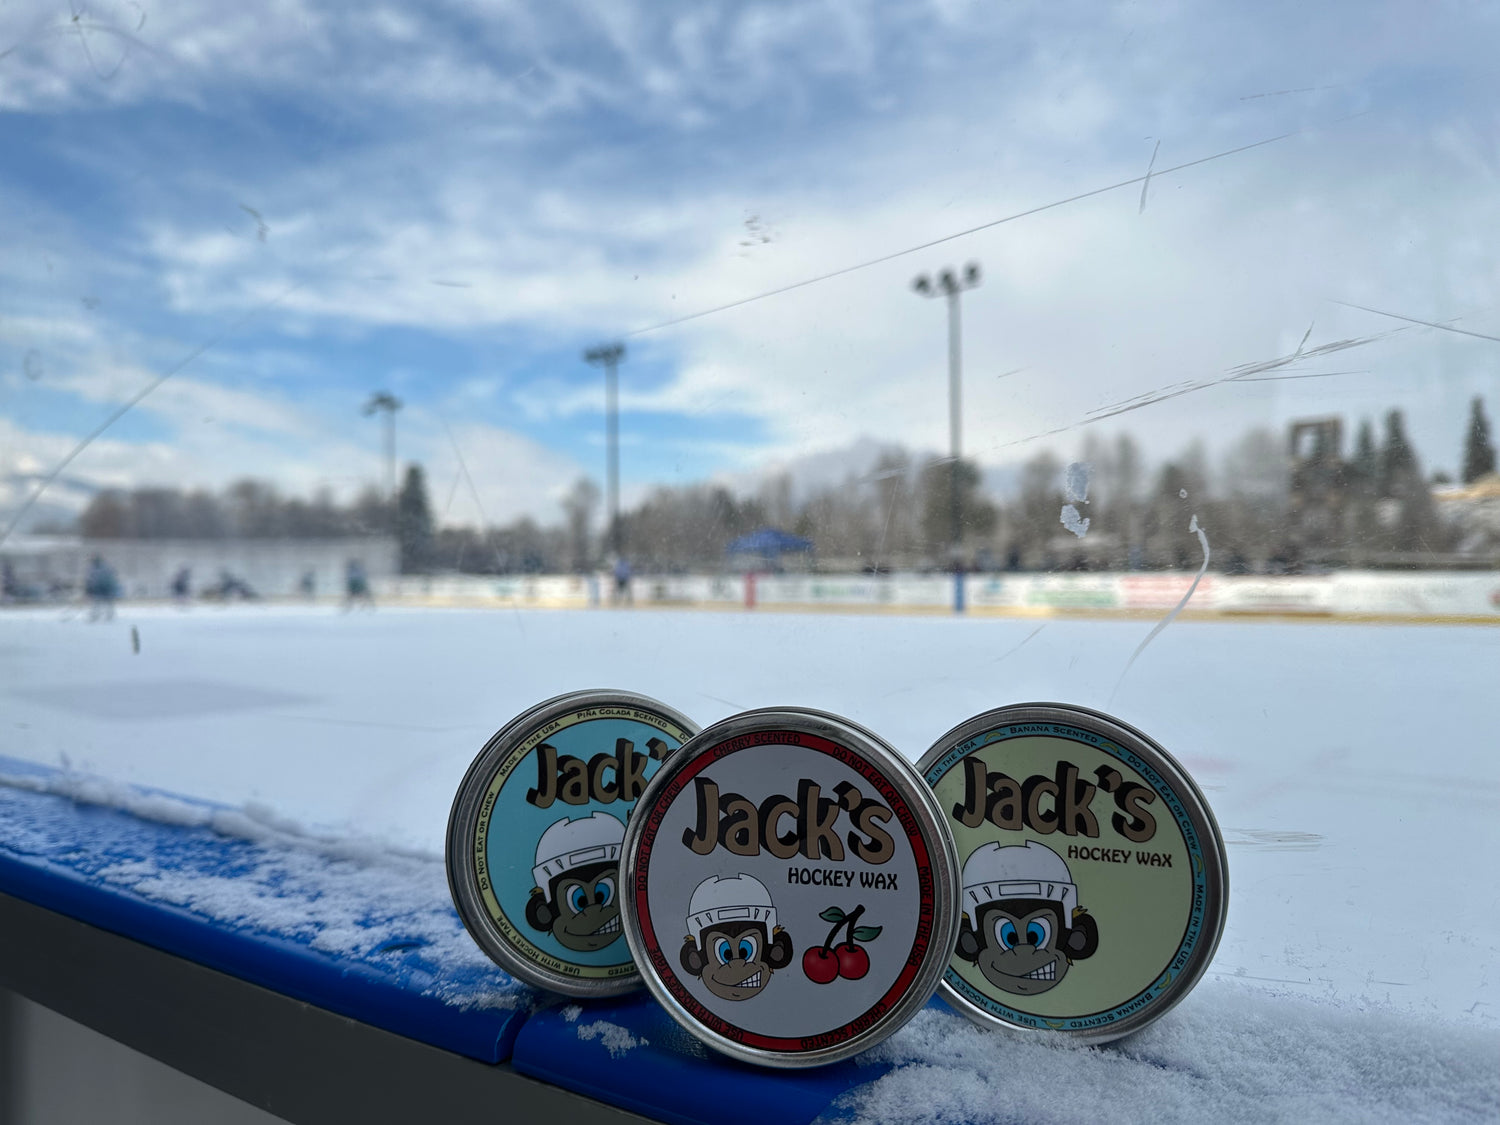 Jacks Hockey Wax tins at the outdoor rink in Winthrop, WA